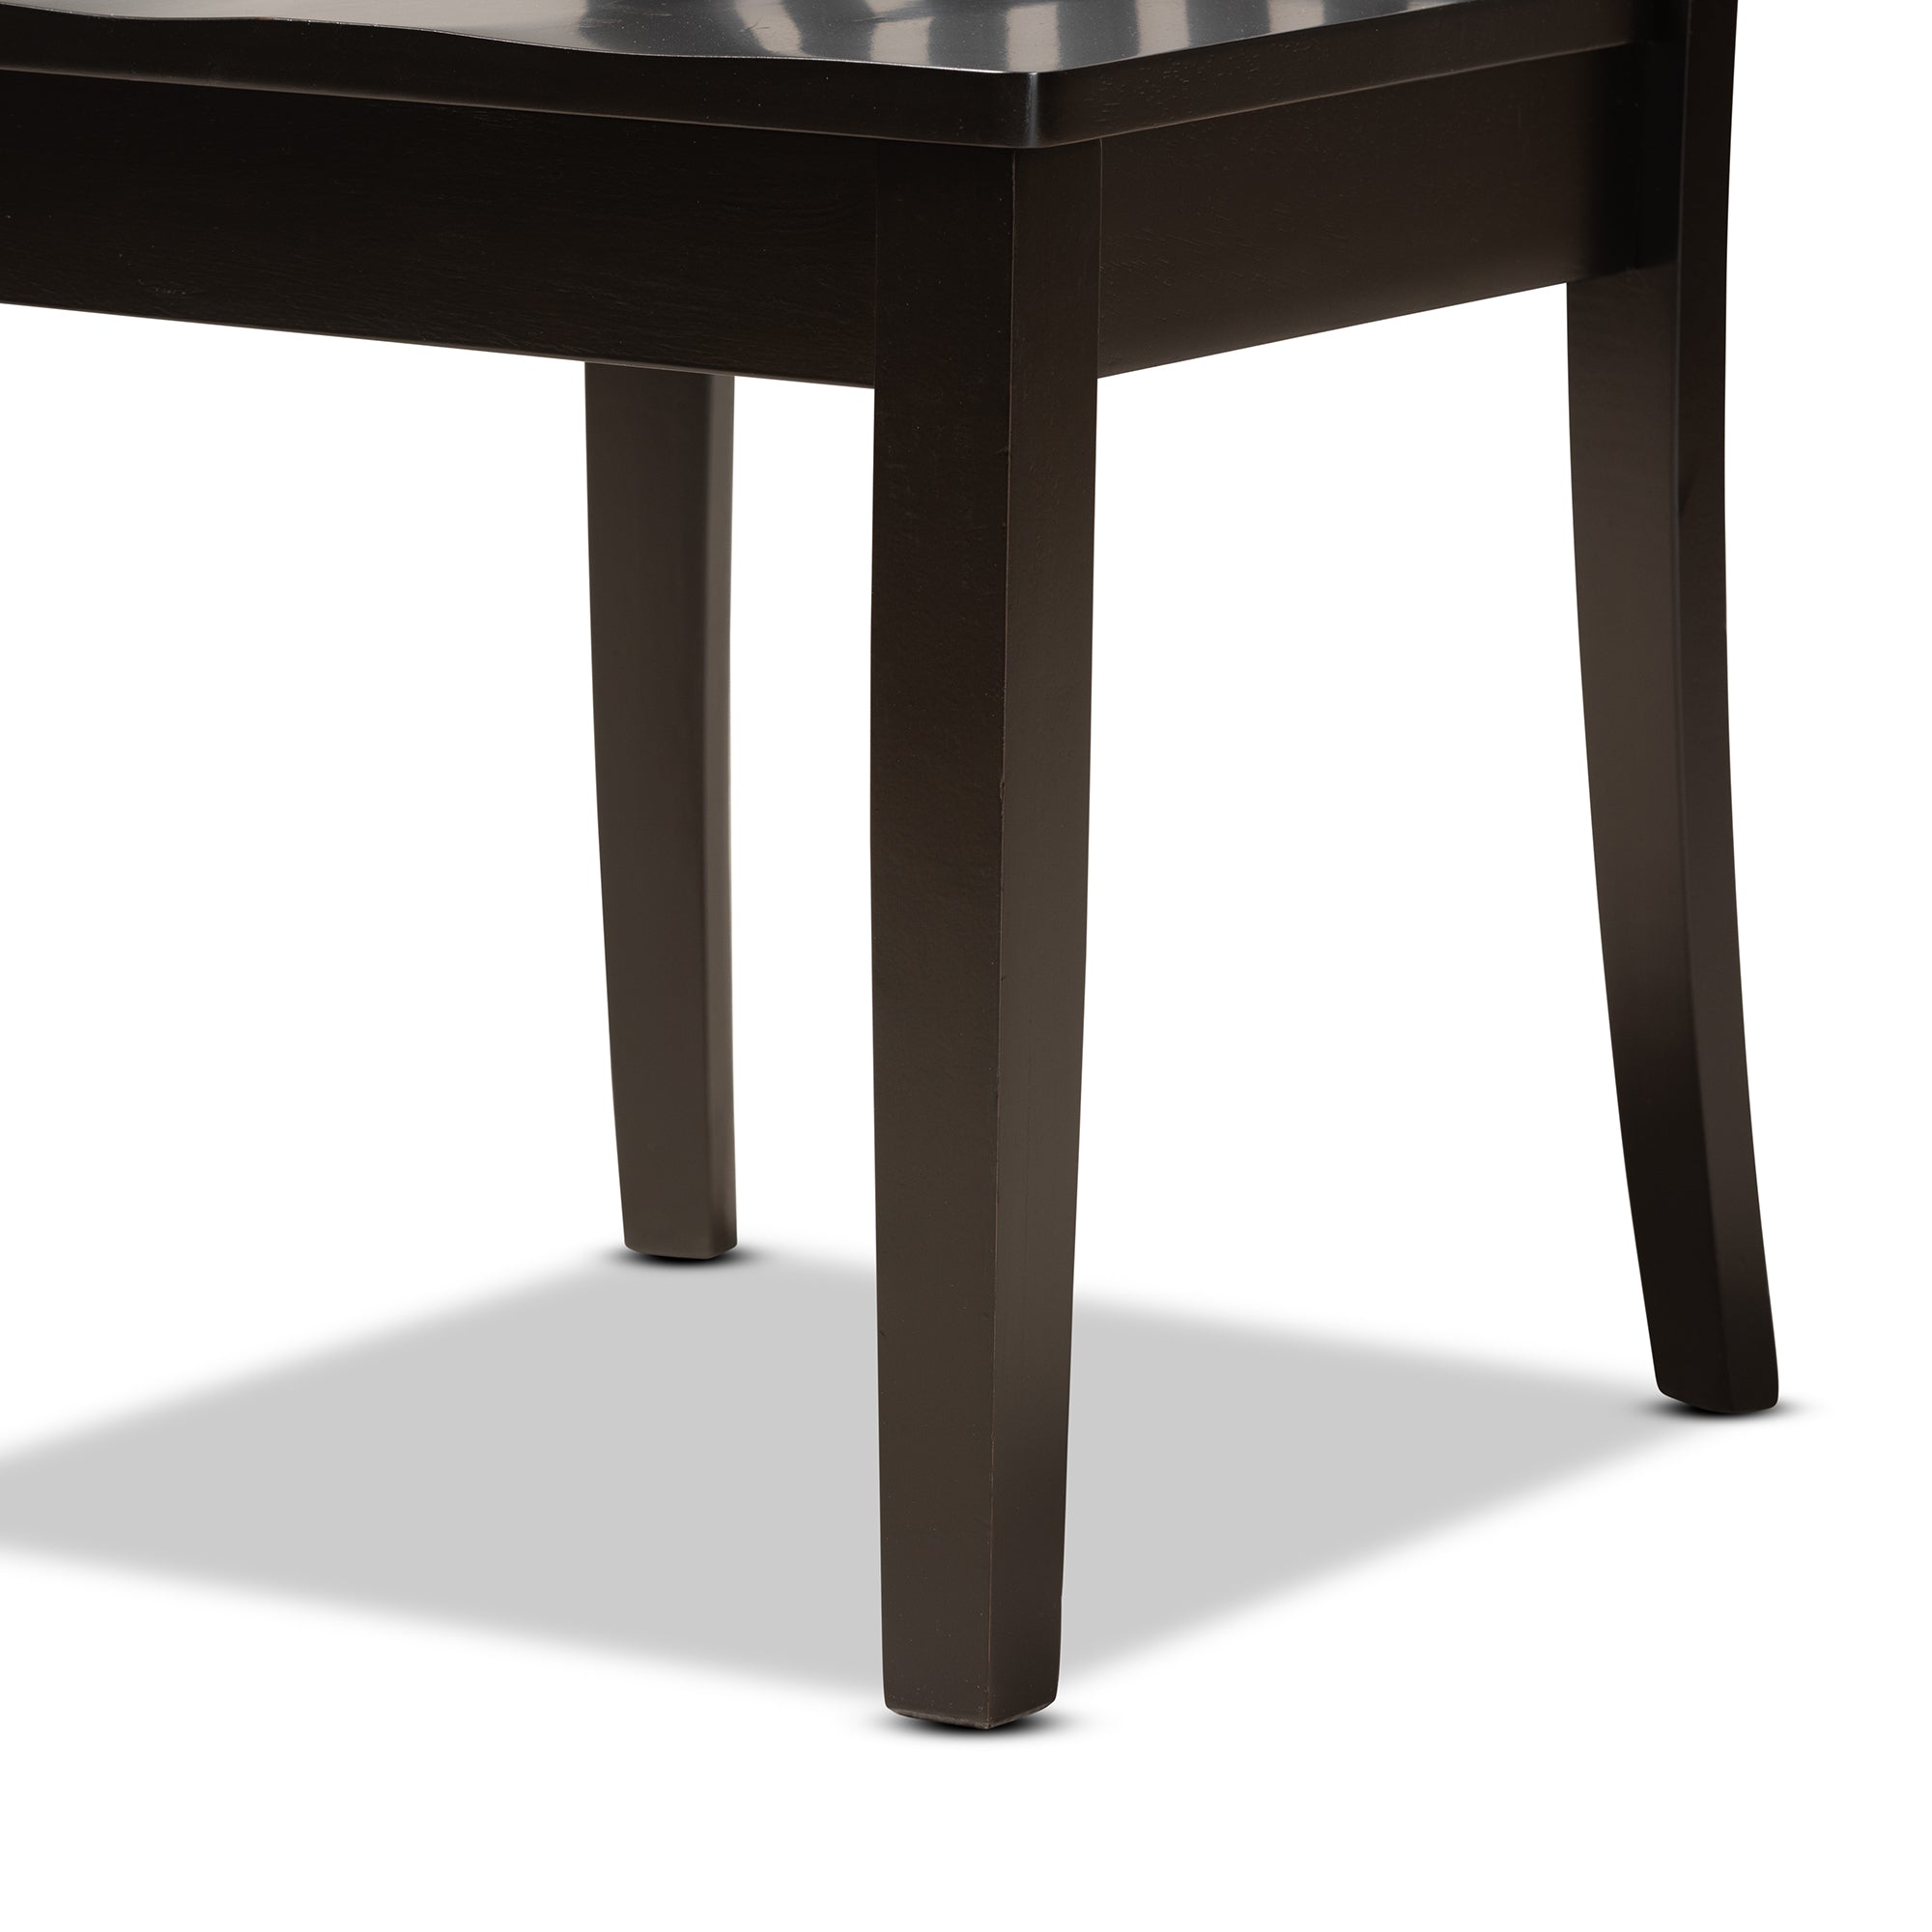 Zora Modern Dining Table & Six (6) Dining Chairs 7-Piece-Dining Set-Baxton Studio - WI-Wall2Wall Furnishings